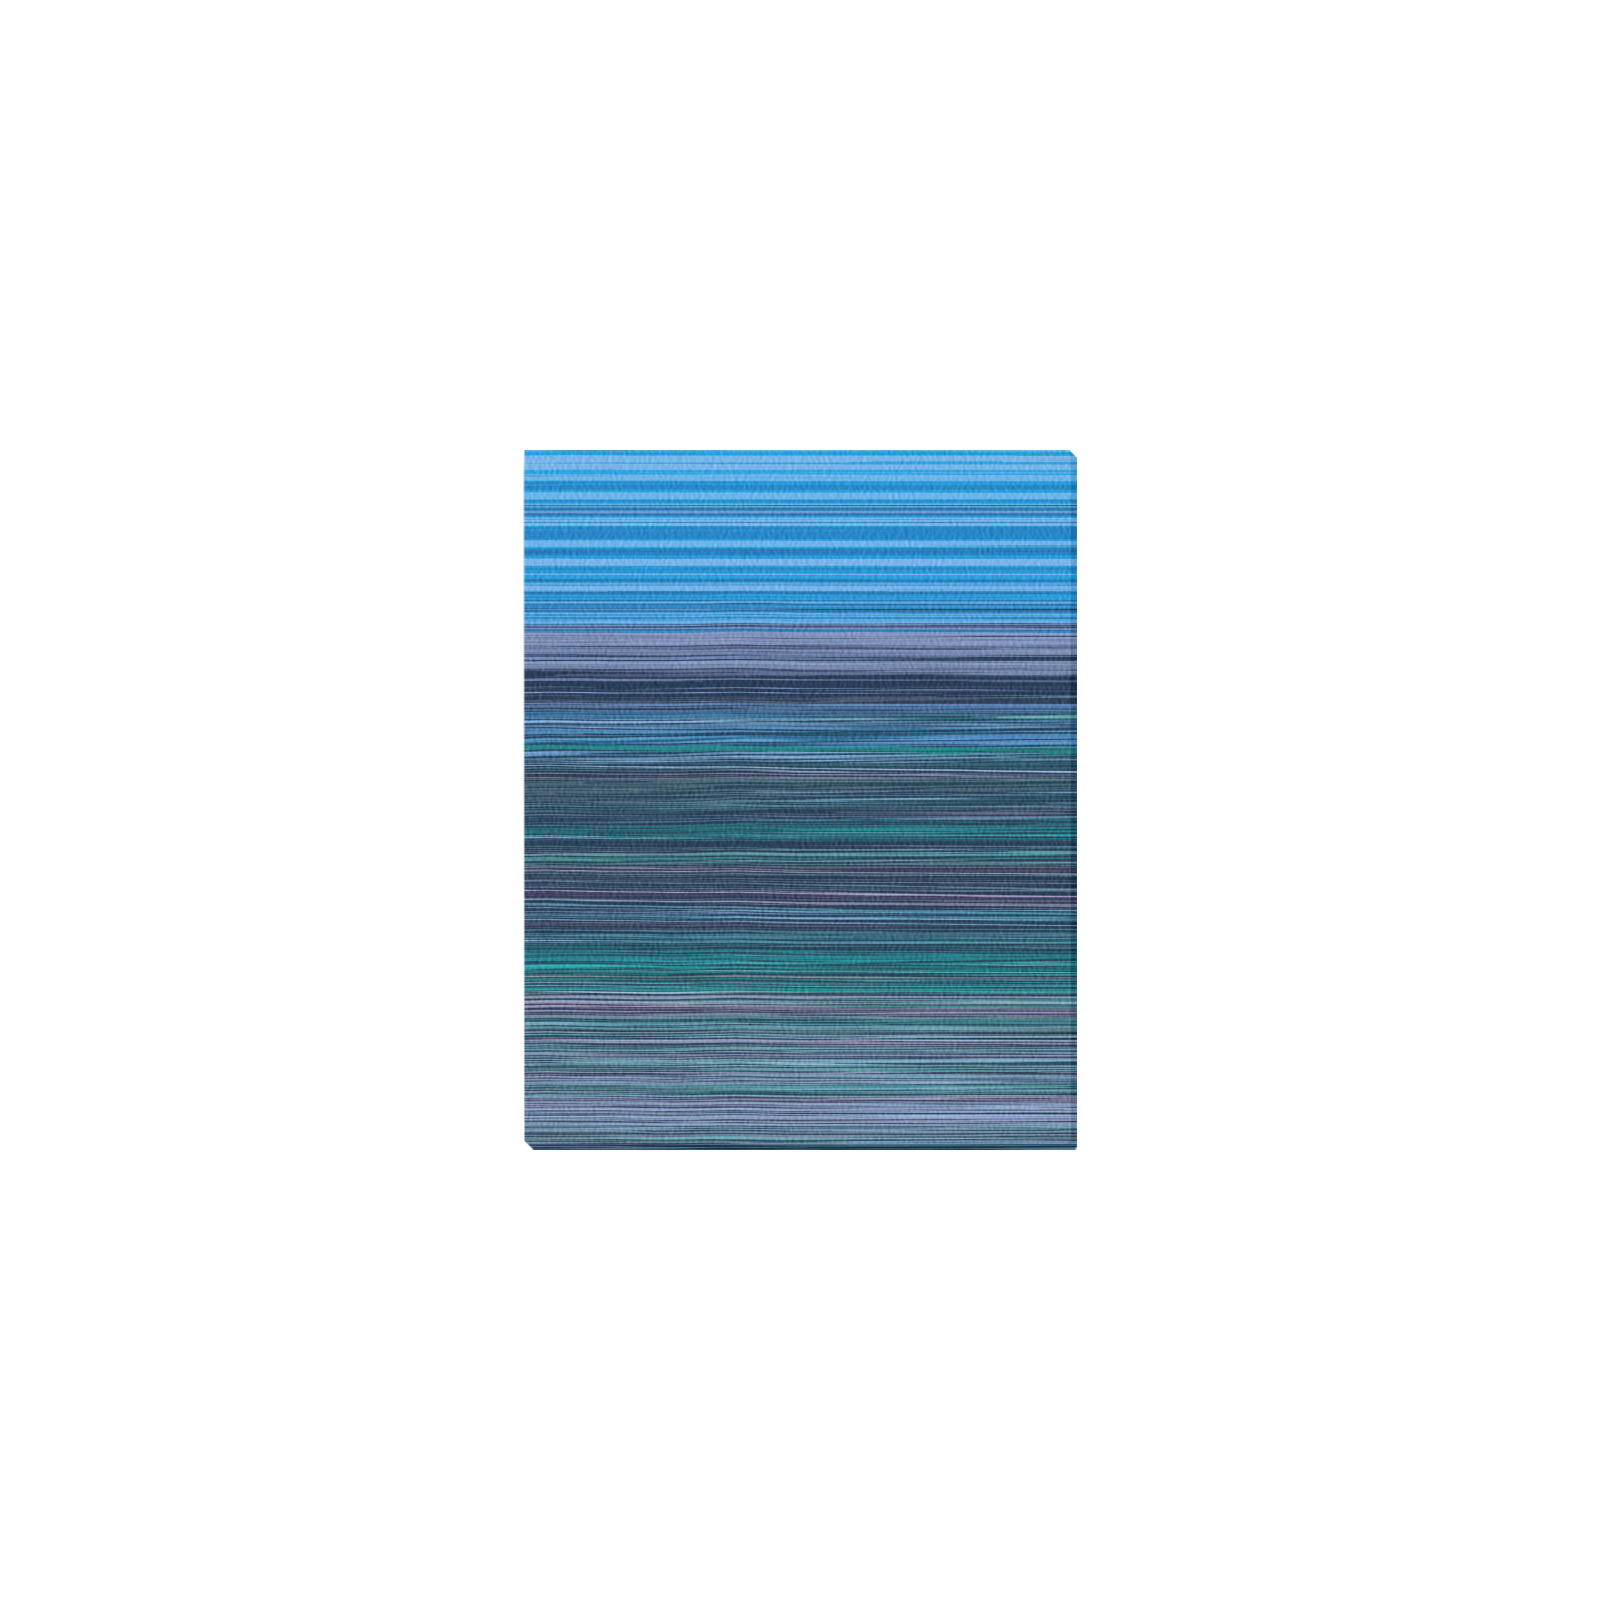 Abstract Blue Horizontal Stripes Frame Canvas Print 11"x14"